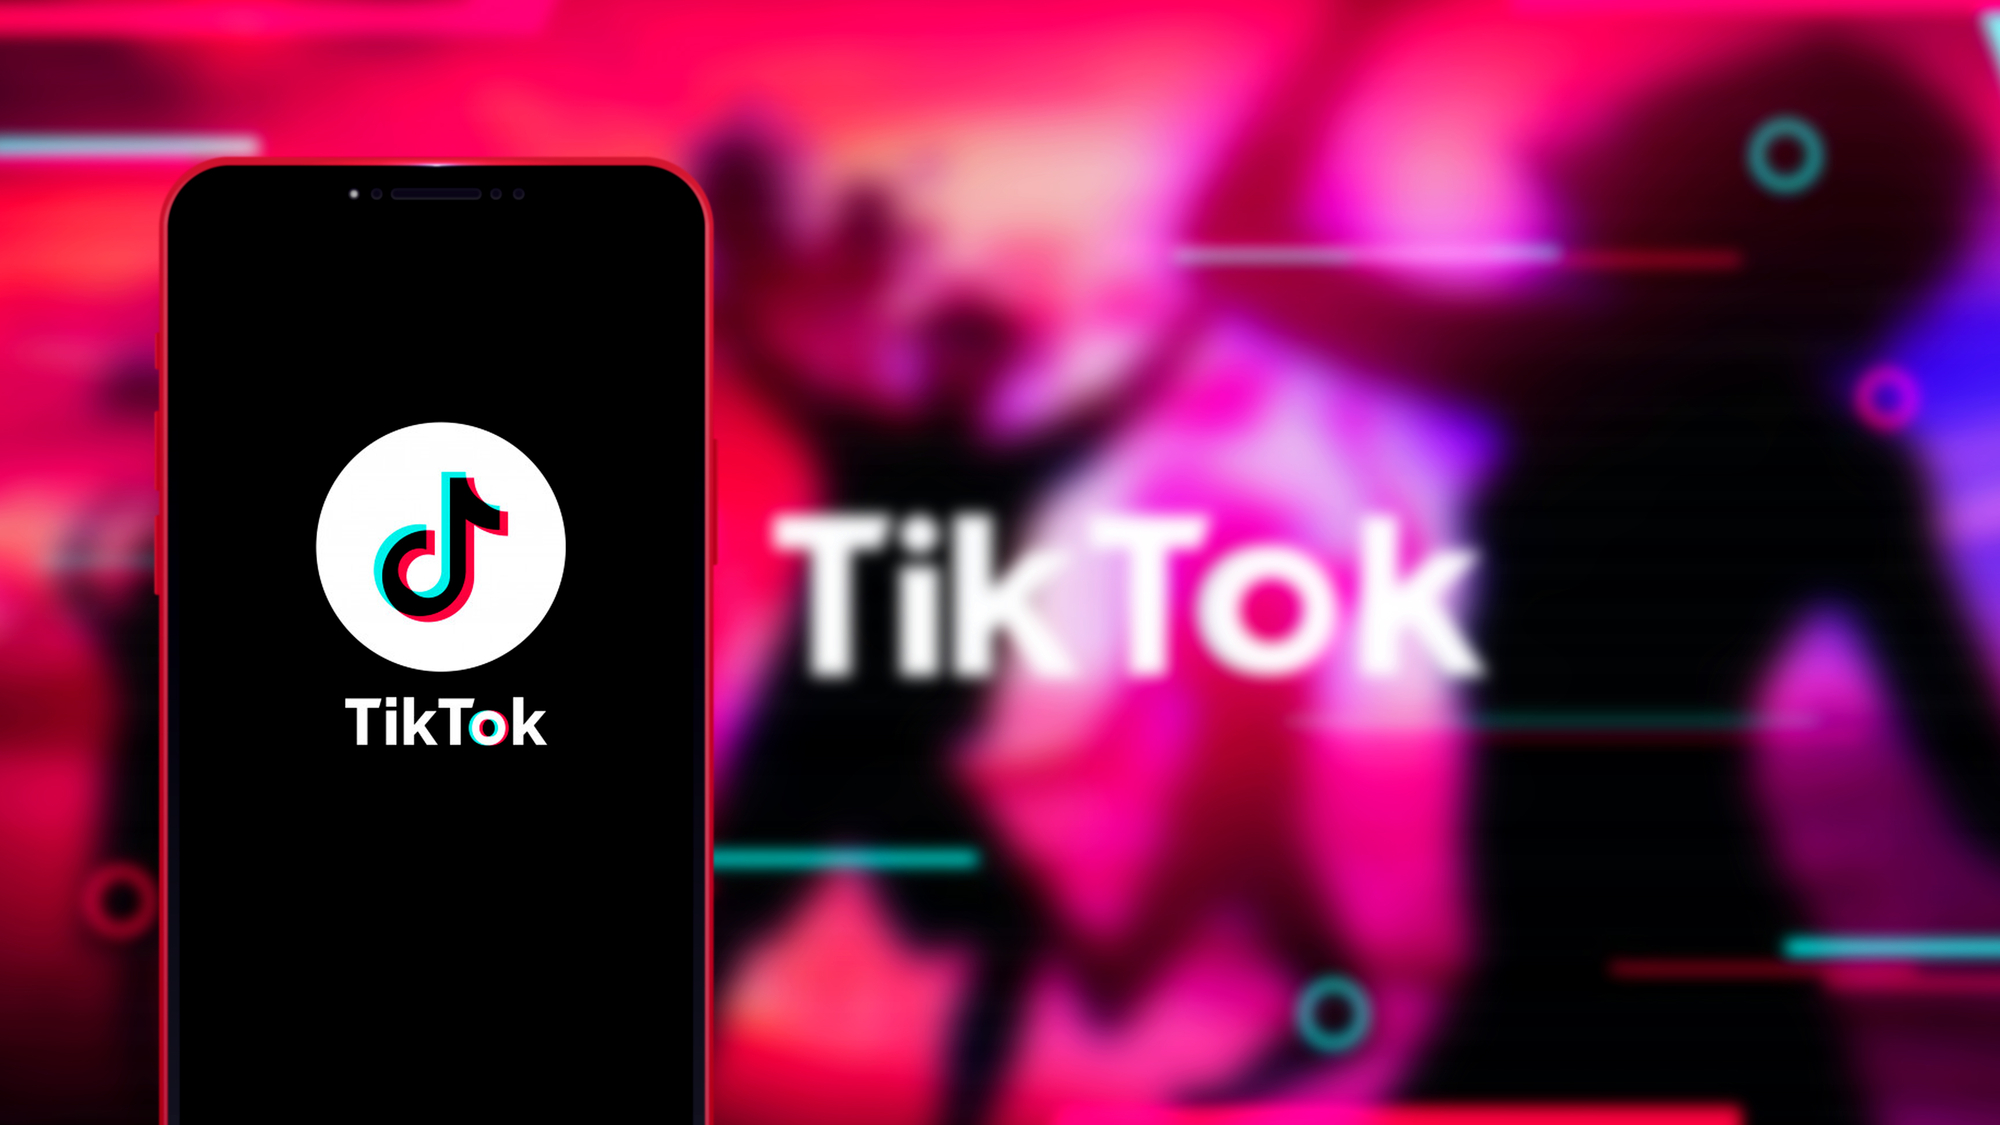 TikTok: Built for Marketing, Not Just Gen Z